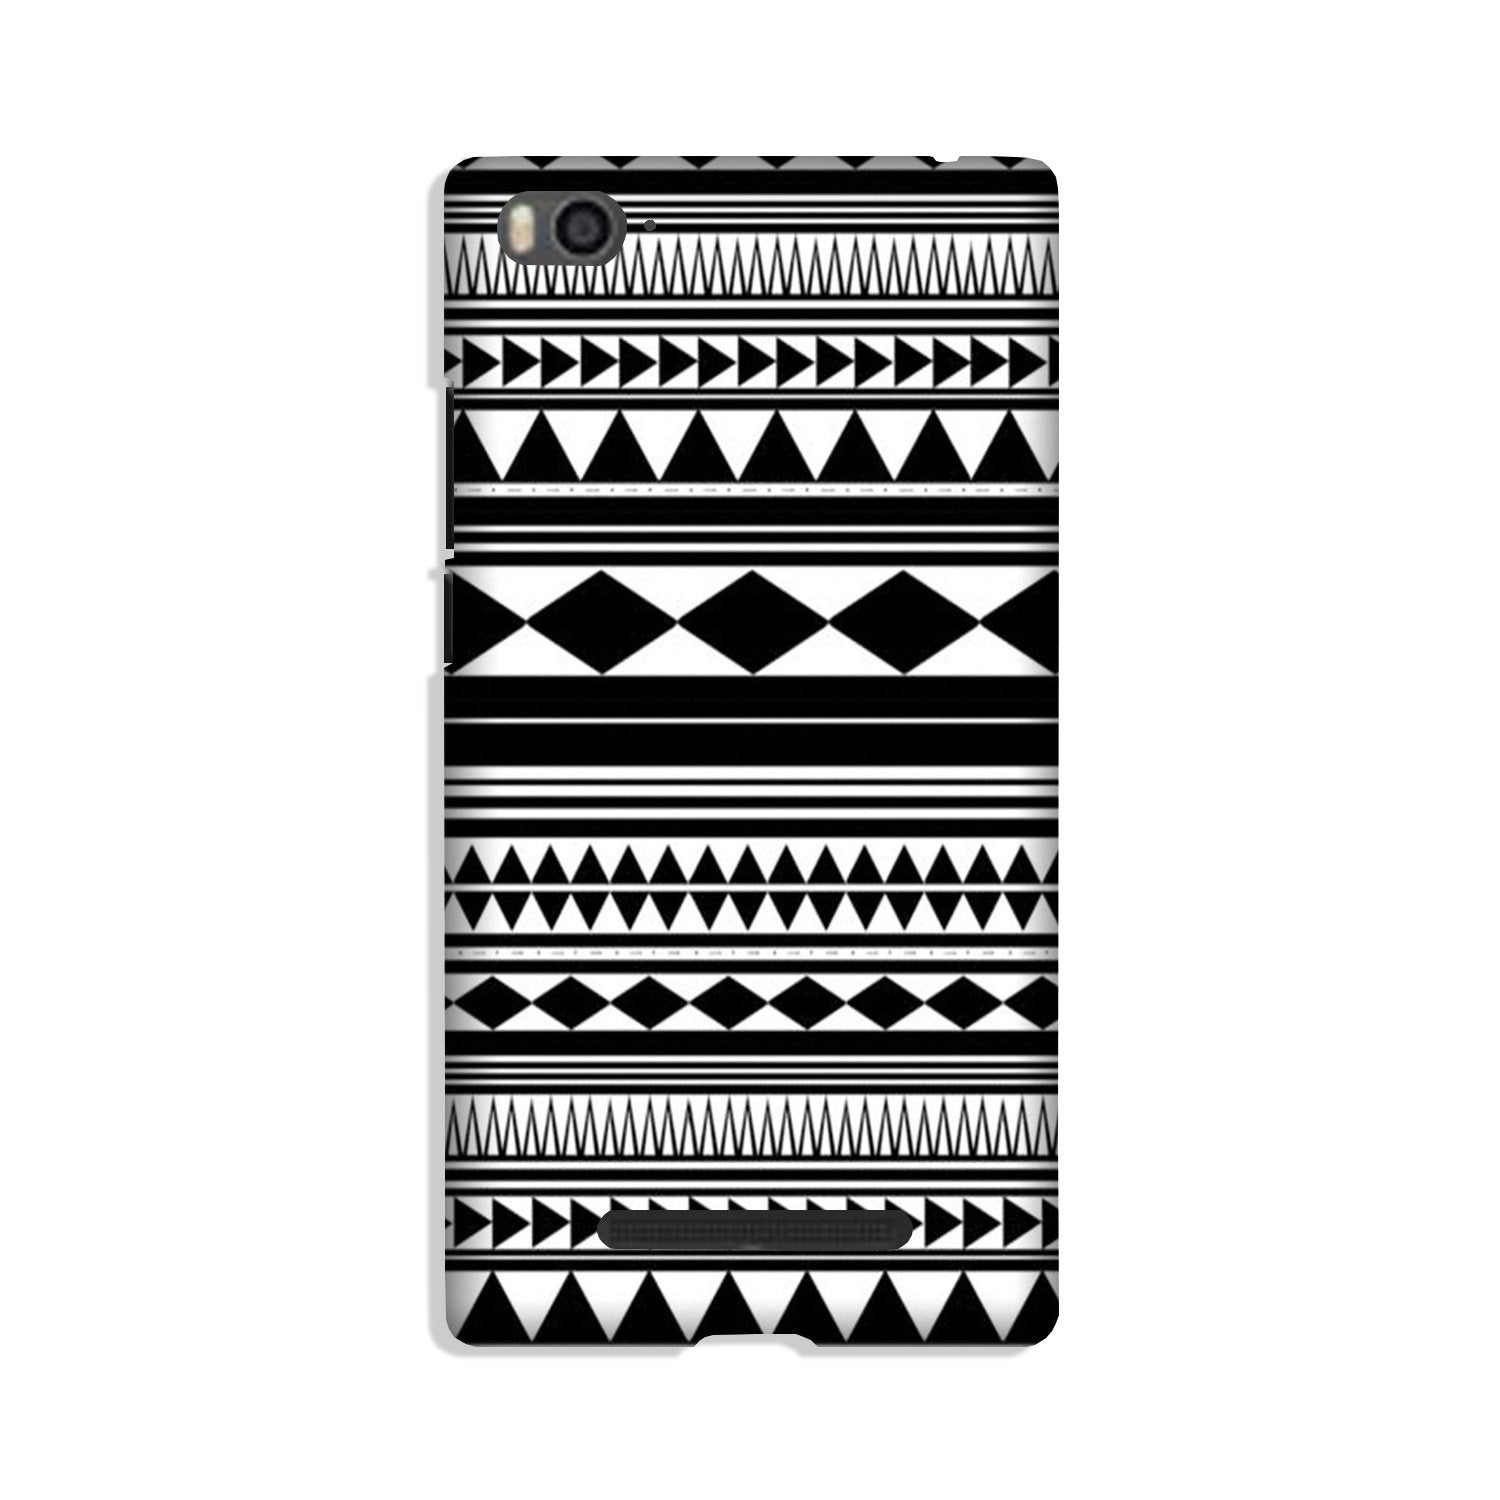 Black white Pattern Case for Redmi 4A